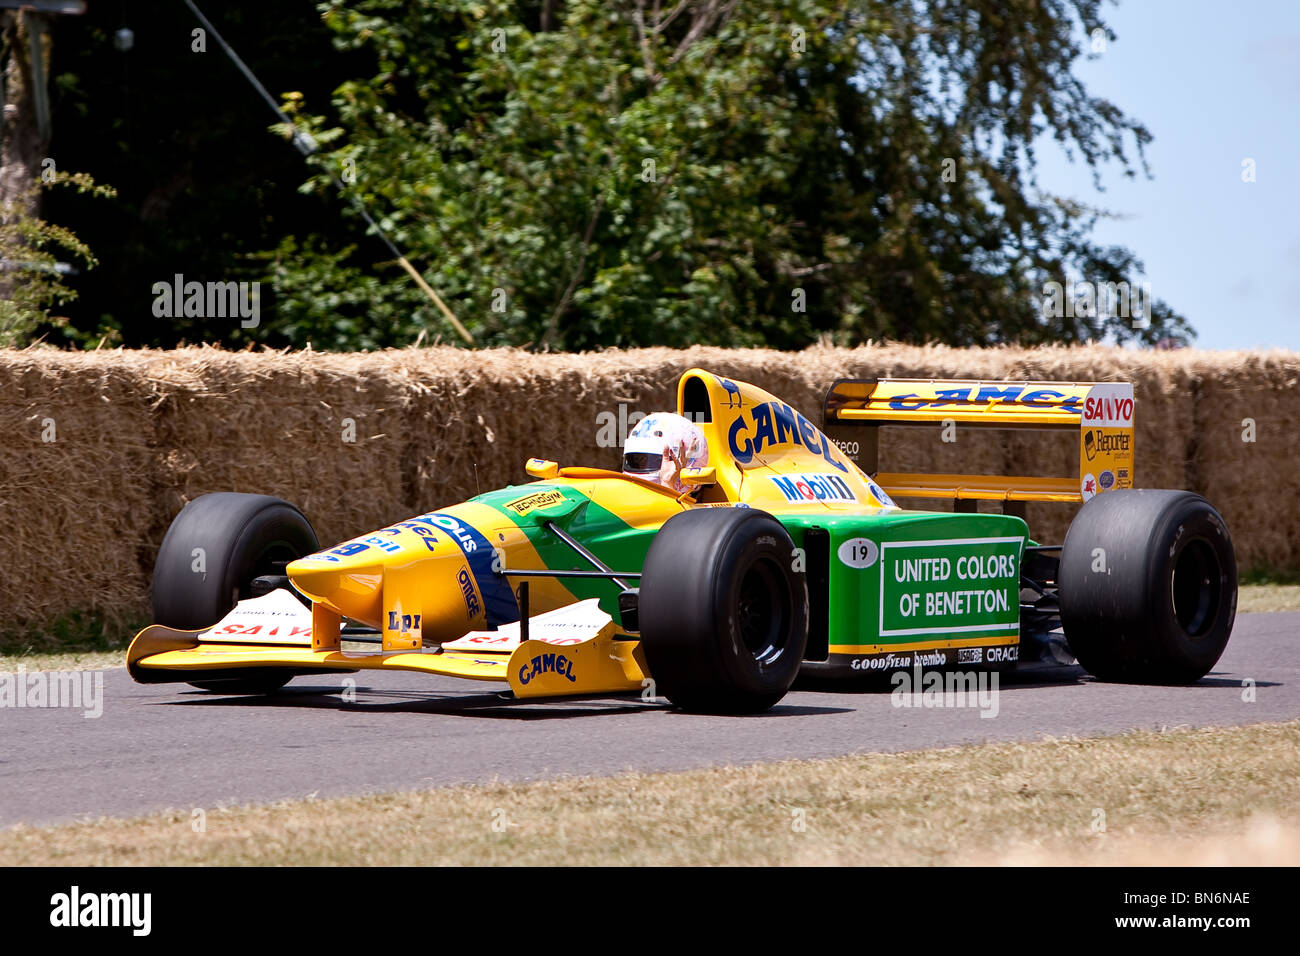 1992 B192 Benetton Cosworth beim Festival of Speed in Goodwood  Stockfotografie - Alamy